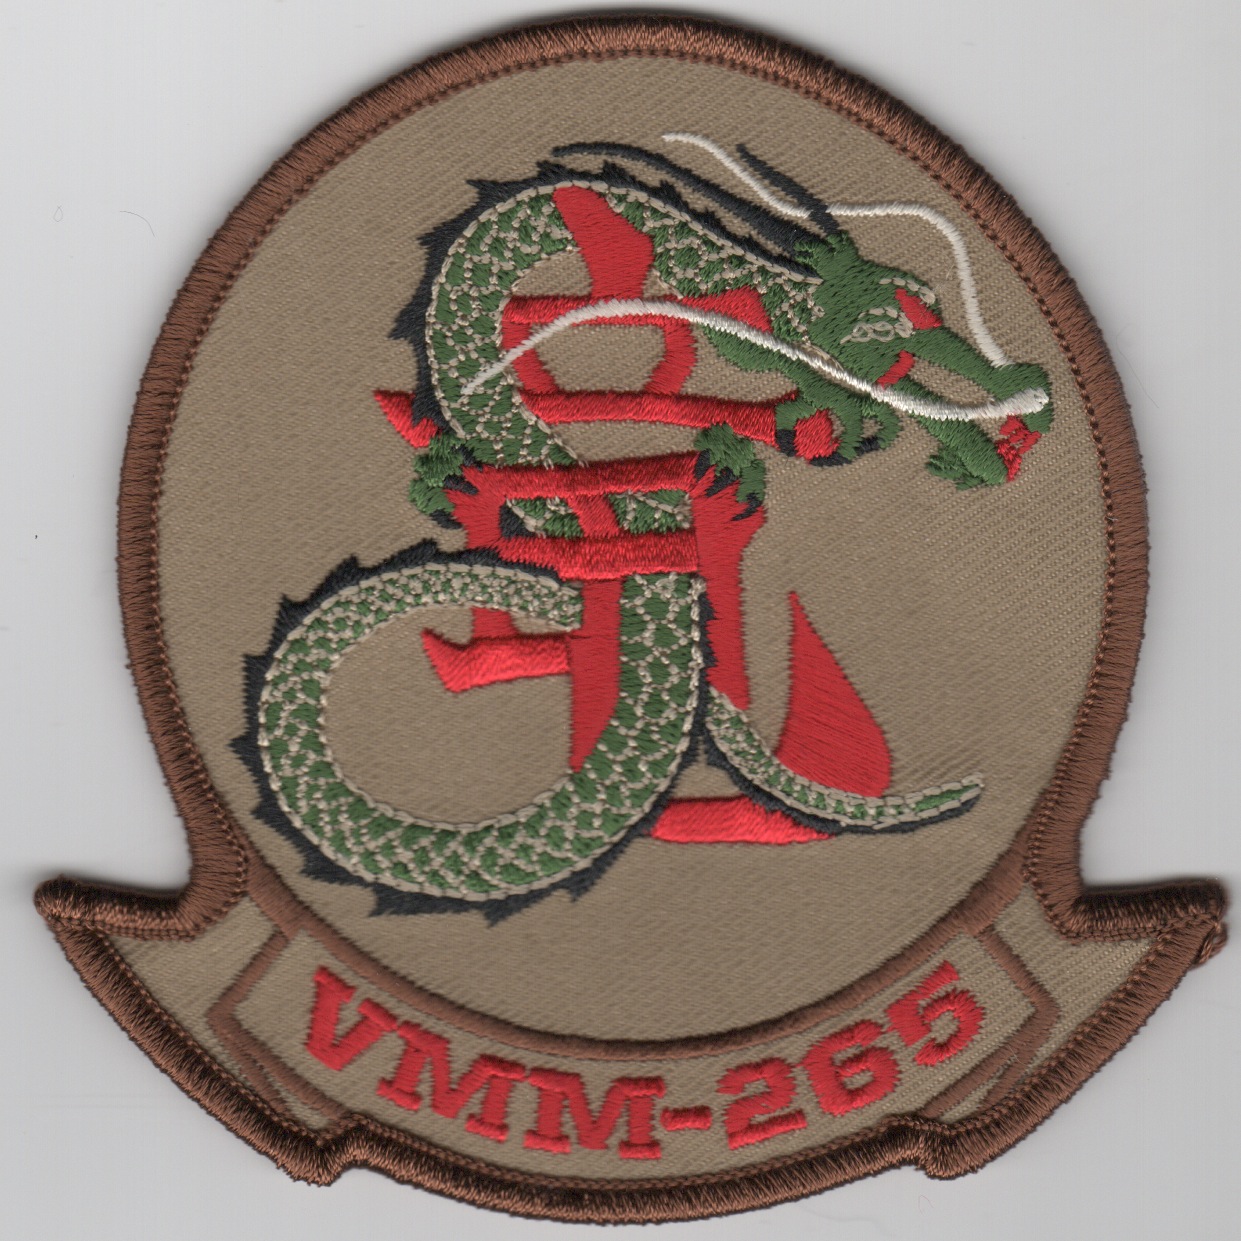 VMM-265 Squadron (Des/Red Letters/Merrowed/No 'REIN')